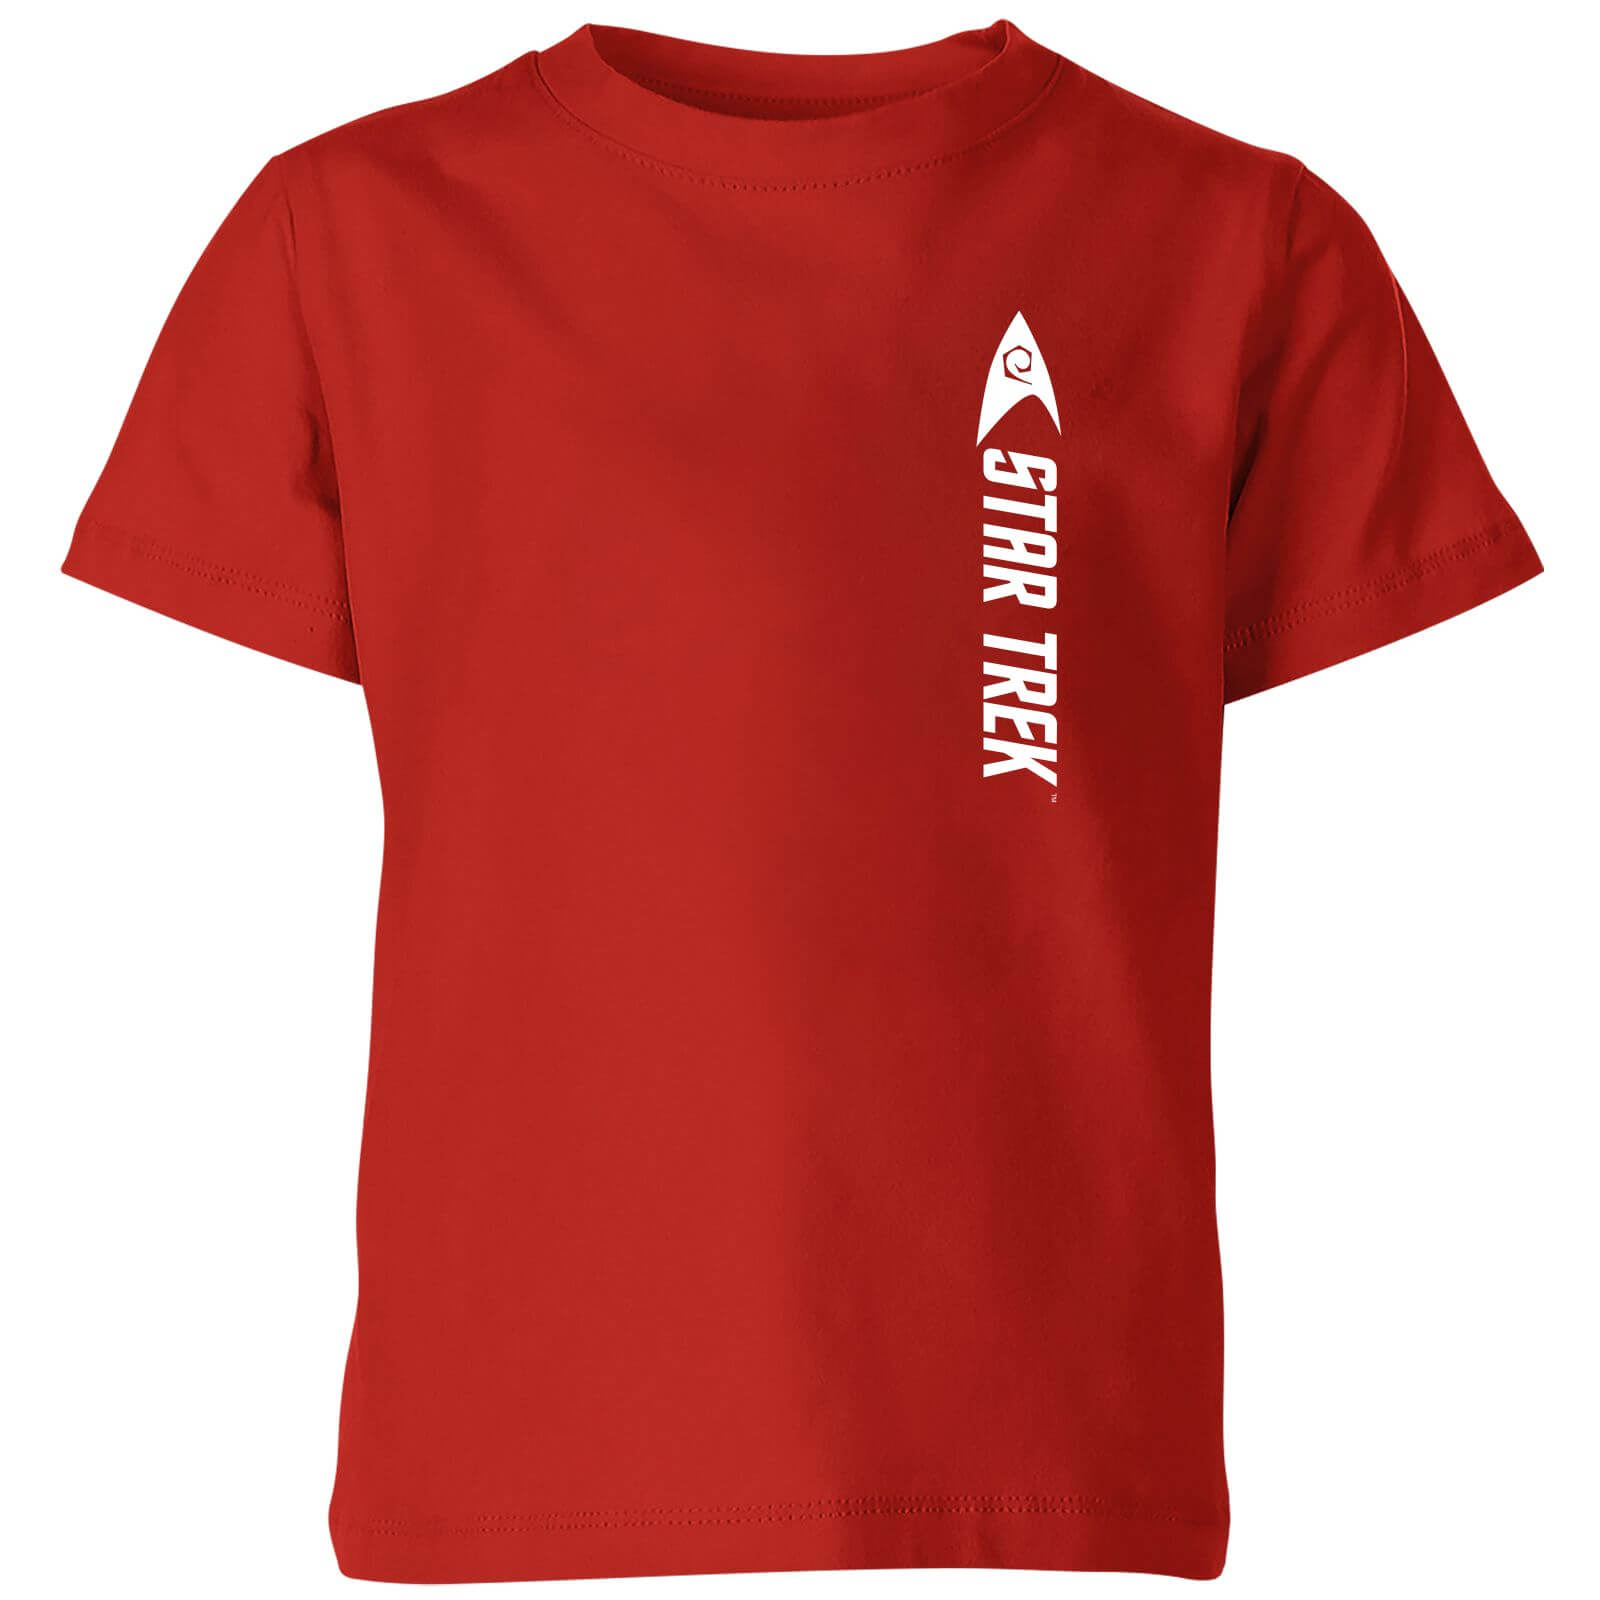 Engineer Badge Star Trek Kids' T-Shirt - Red - 5-6 Years - Red